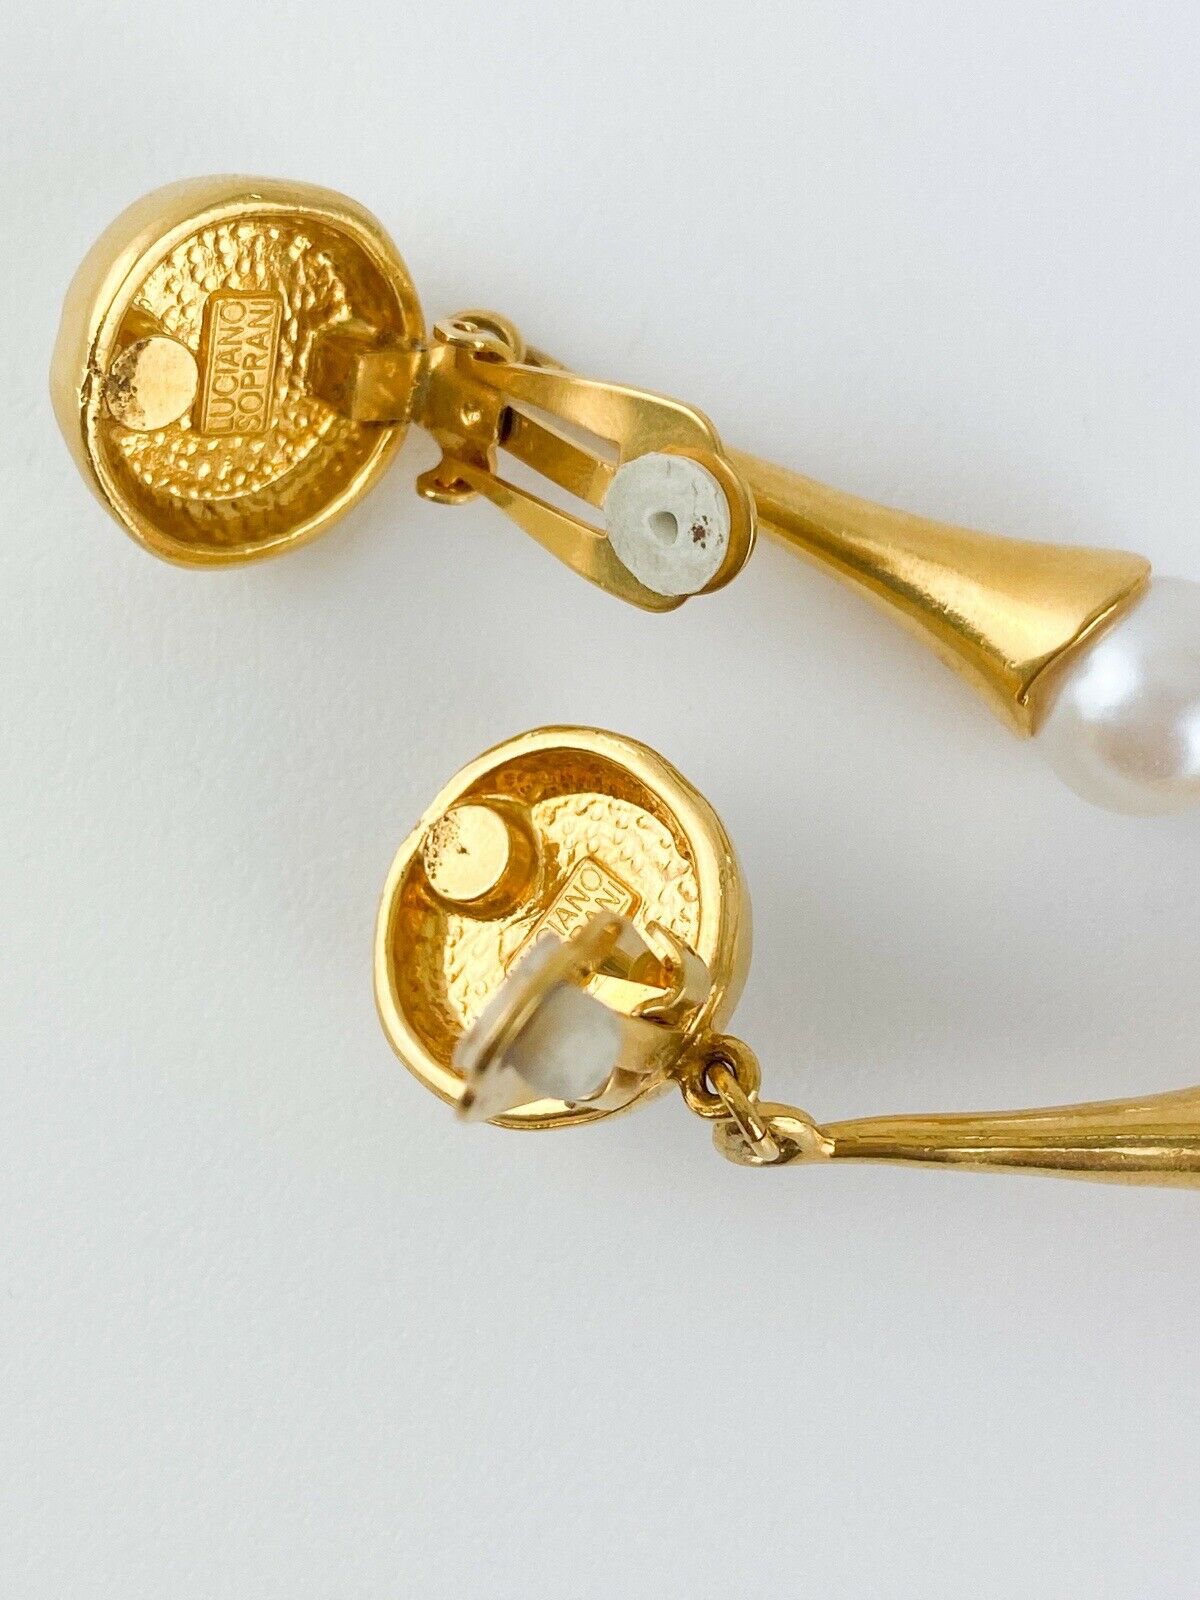 LUCIANO SOPRANI Gold Tone Dangle Earrings Faux Pearls Vintage